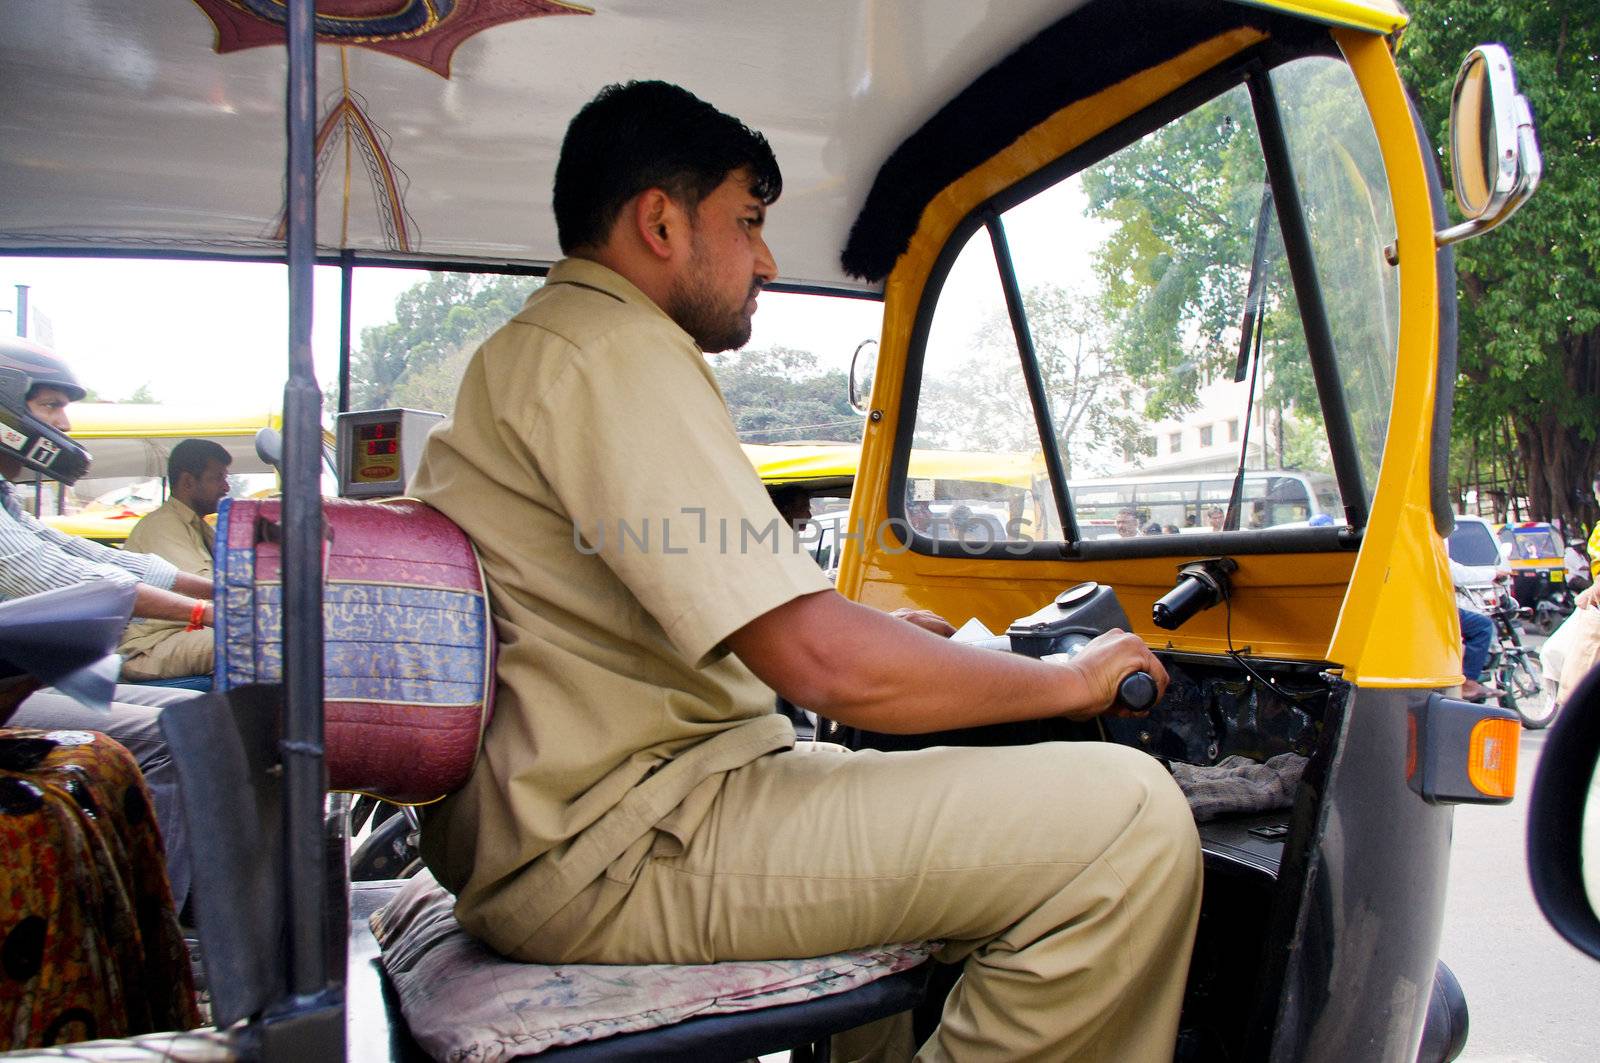 Autorickshaw driver in his taxi, Bangalore (Bengalaru), karnataka, India.